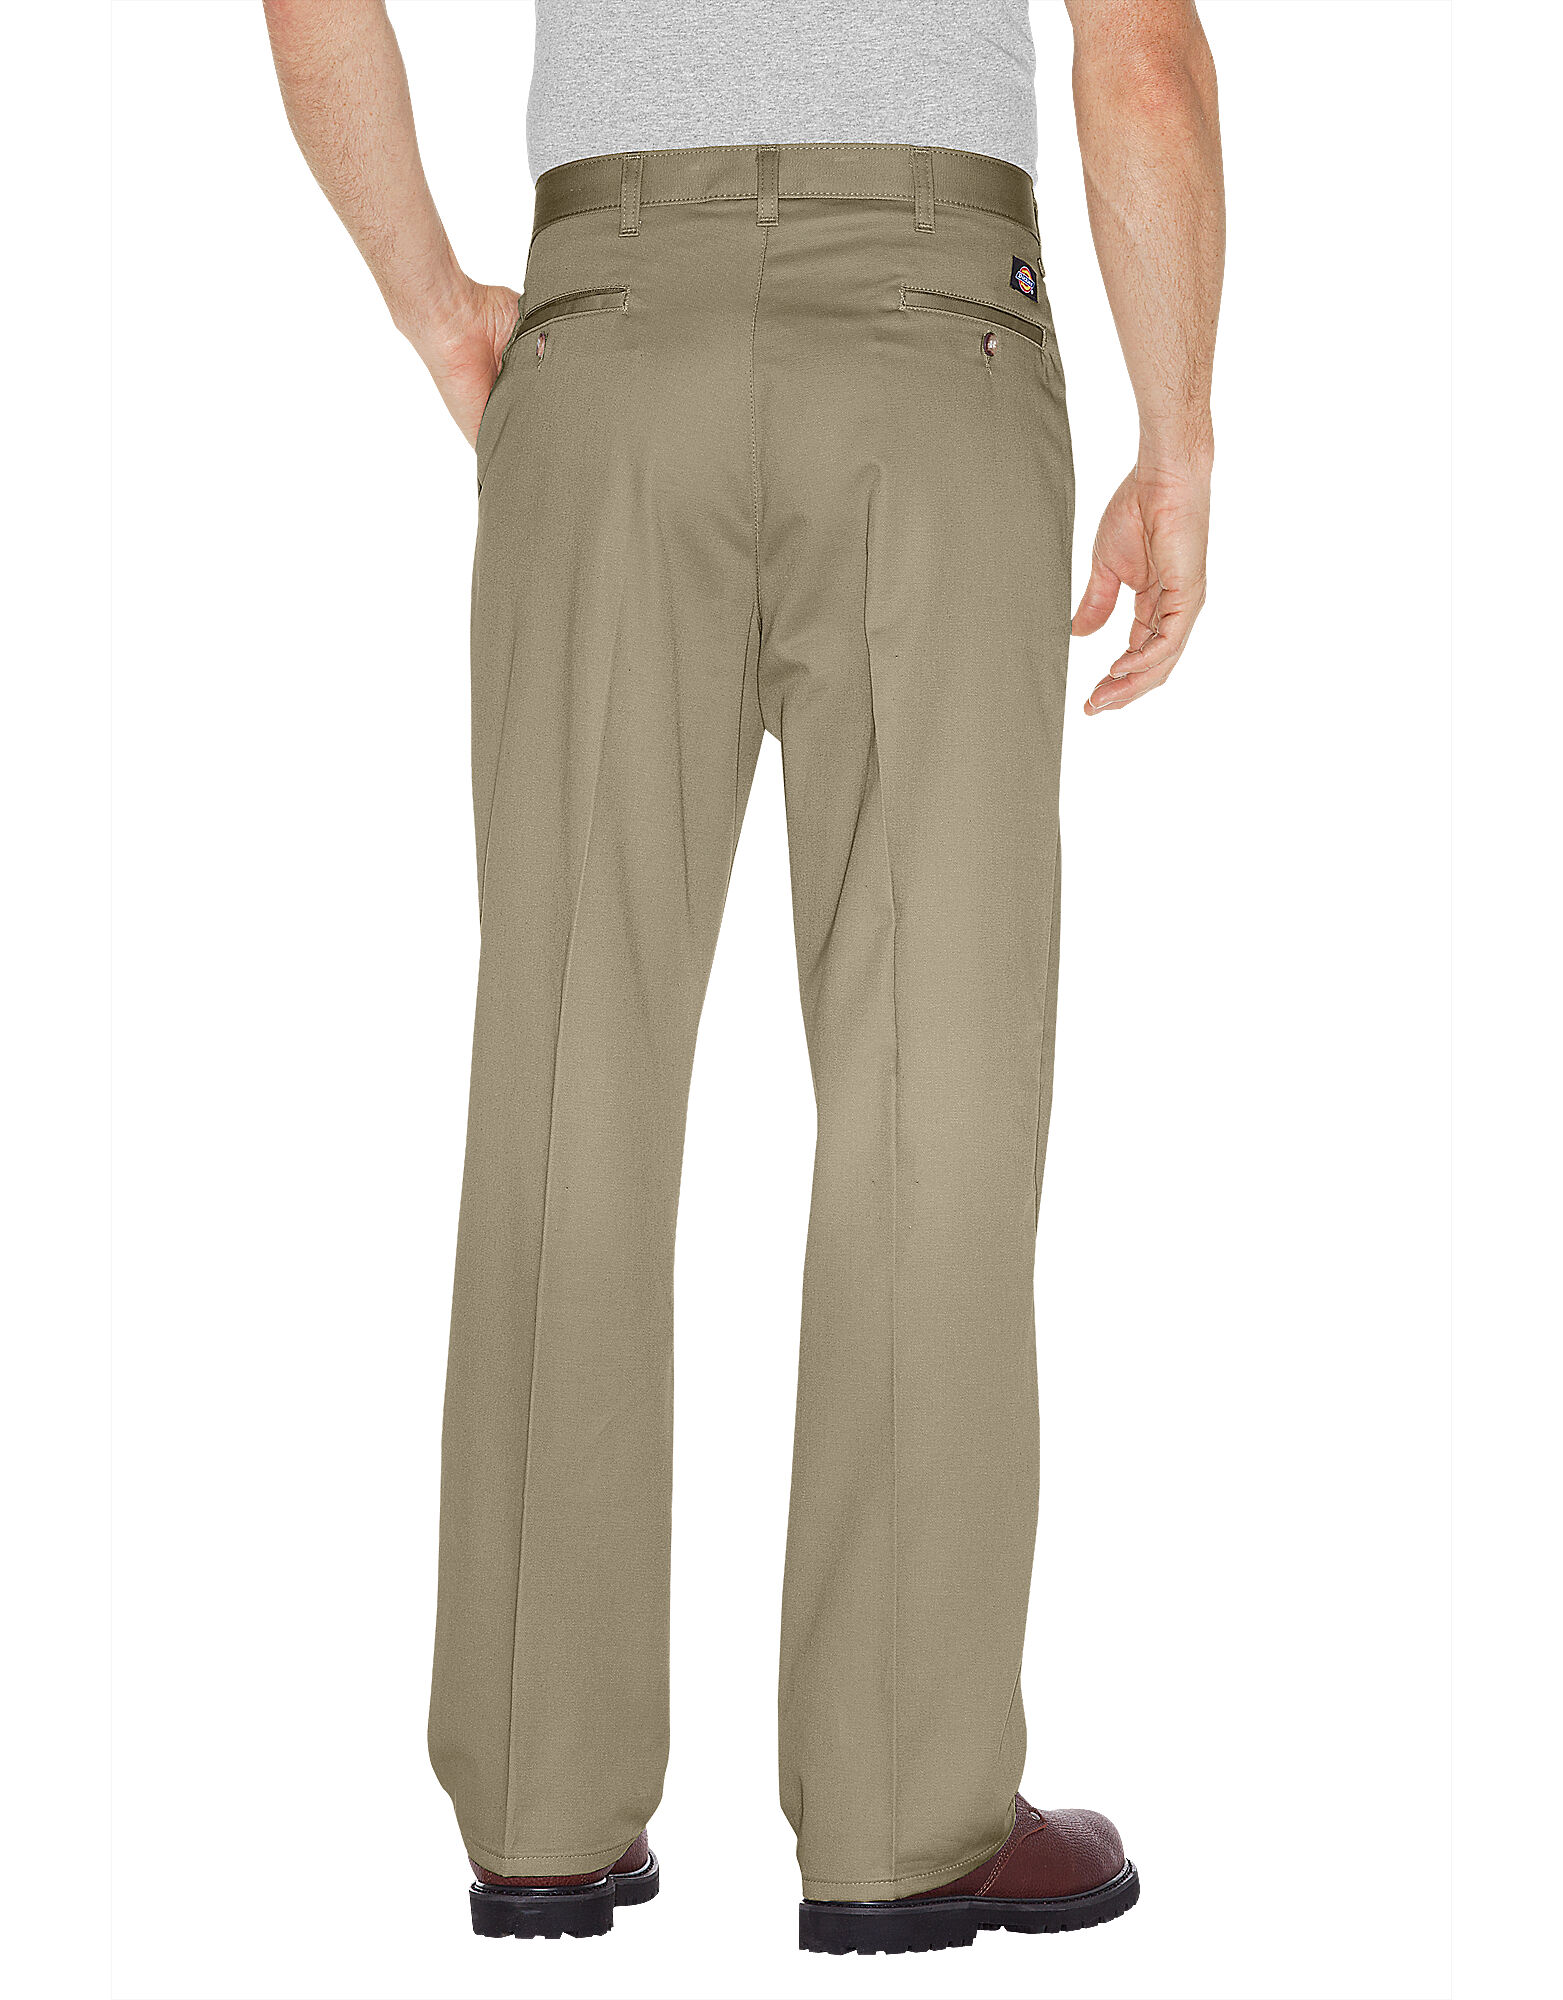 Pleated Khakis For Men Military Khaki | Cotton, Pleated Front Pants ...